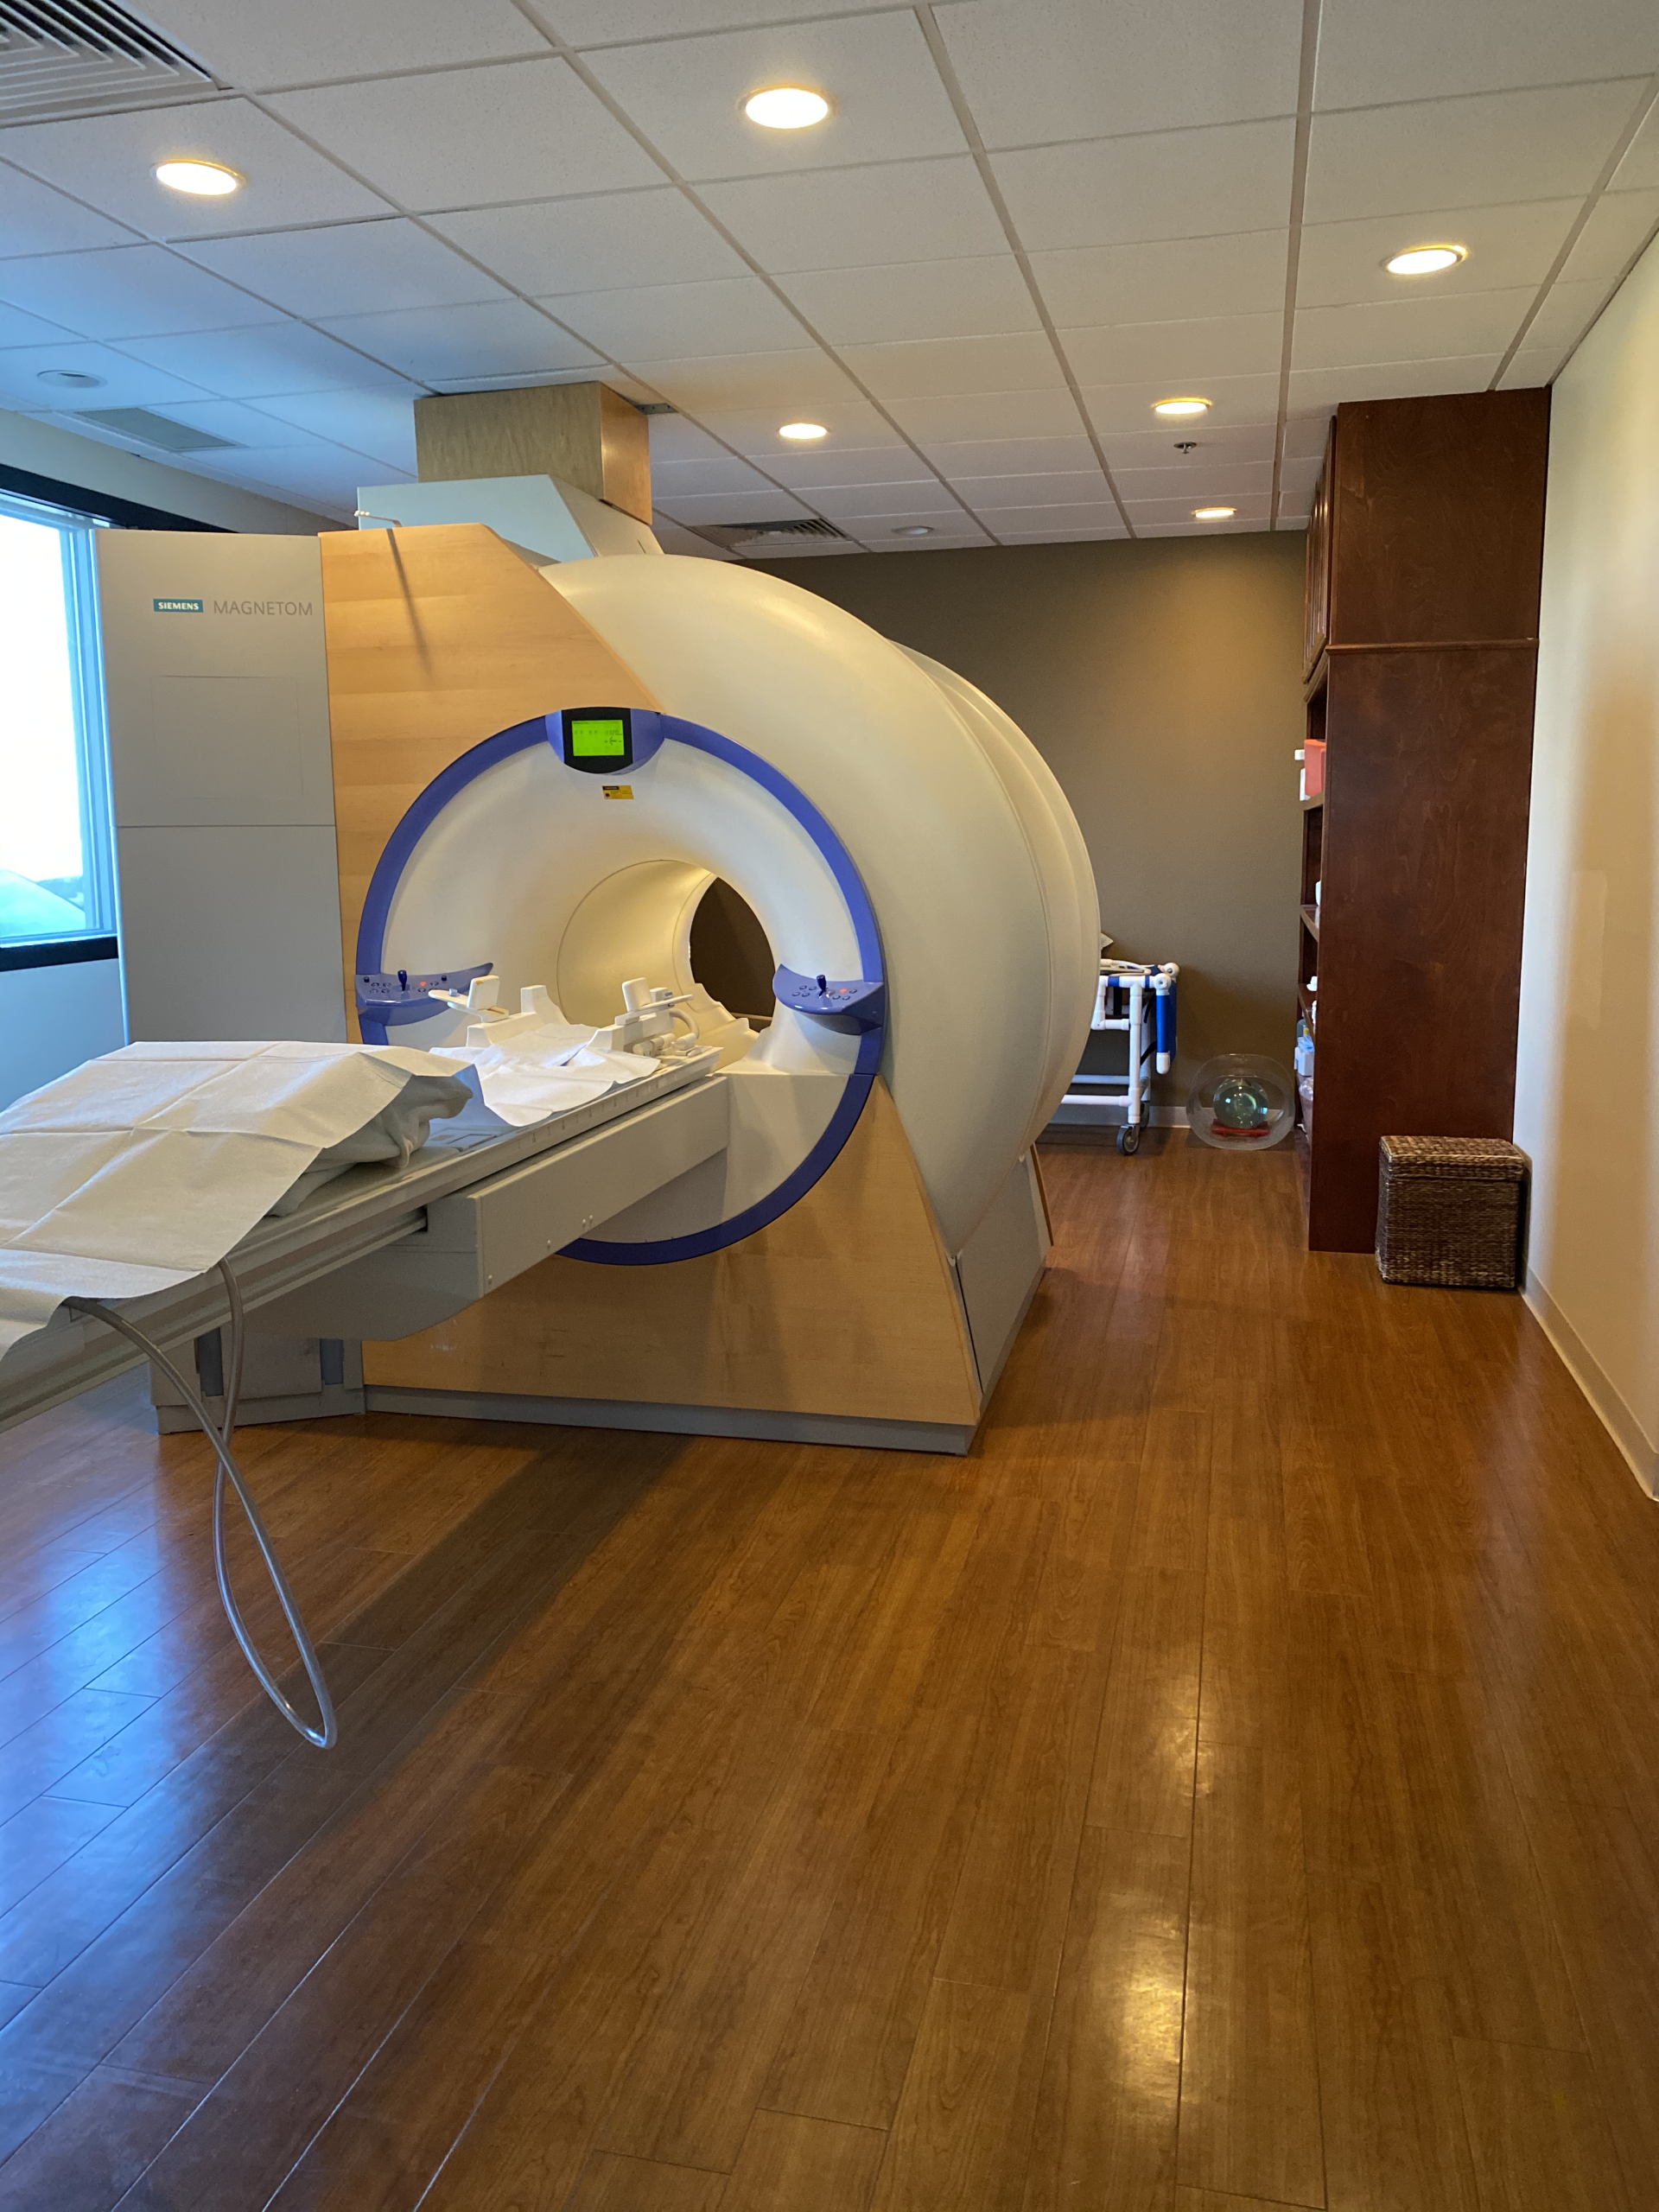 Siemens Magnaton MRI Imaging